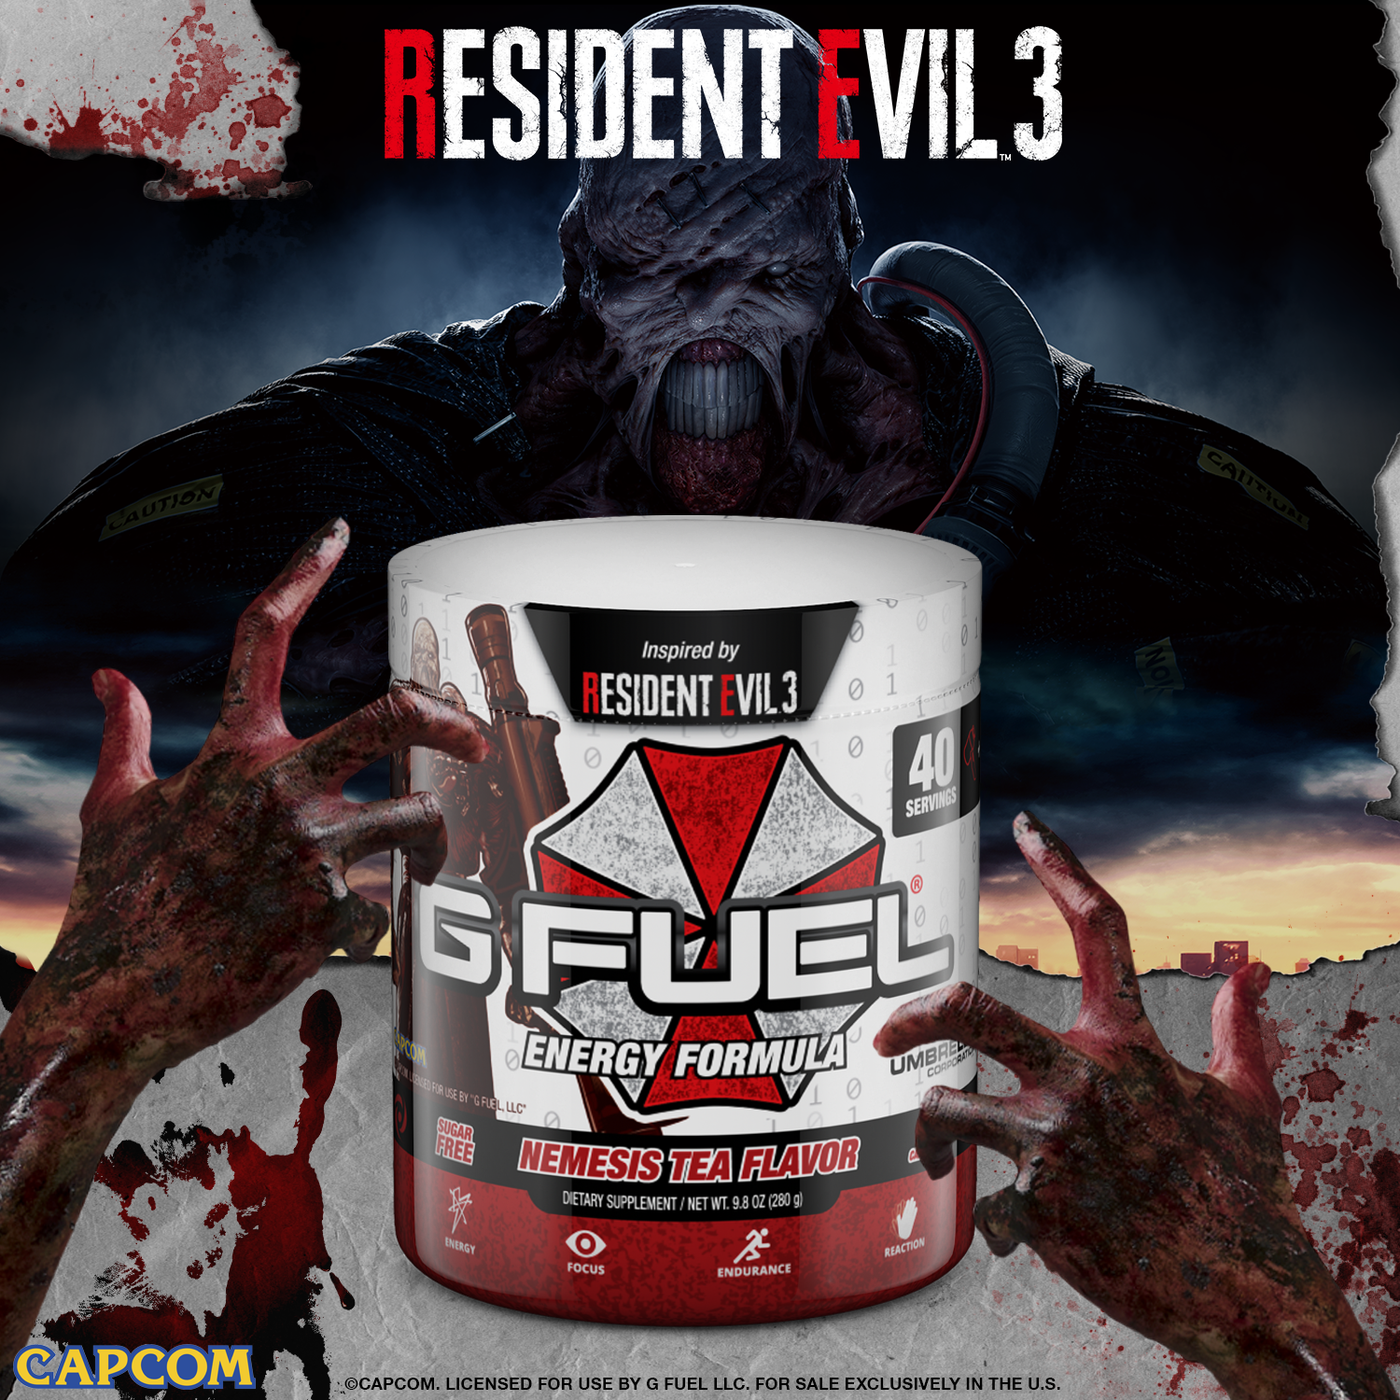 G FUEL Nemesis Tea Flavor tub, inspired by Resident Evil 3